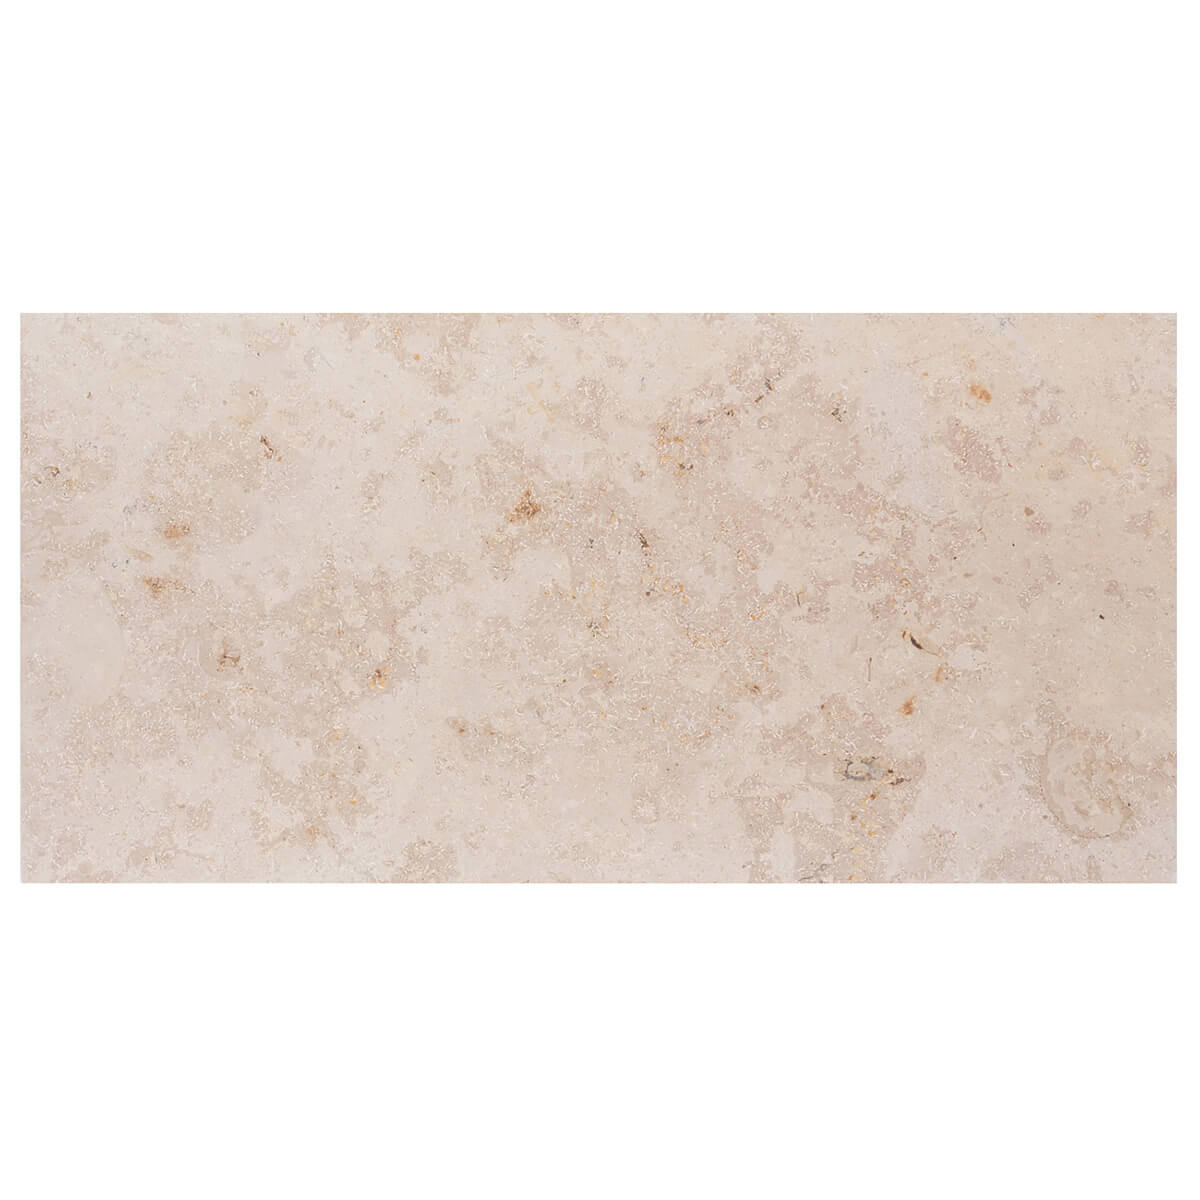 haussmann jura beige limestone rectangle natural stone field tile 12x24 honed